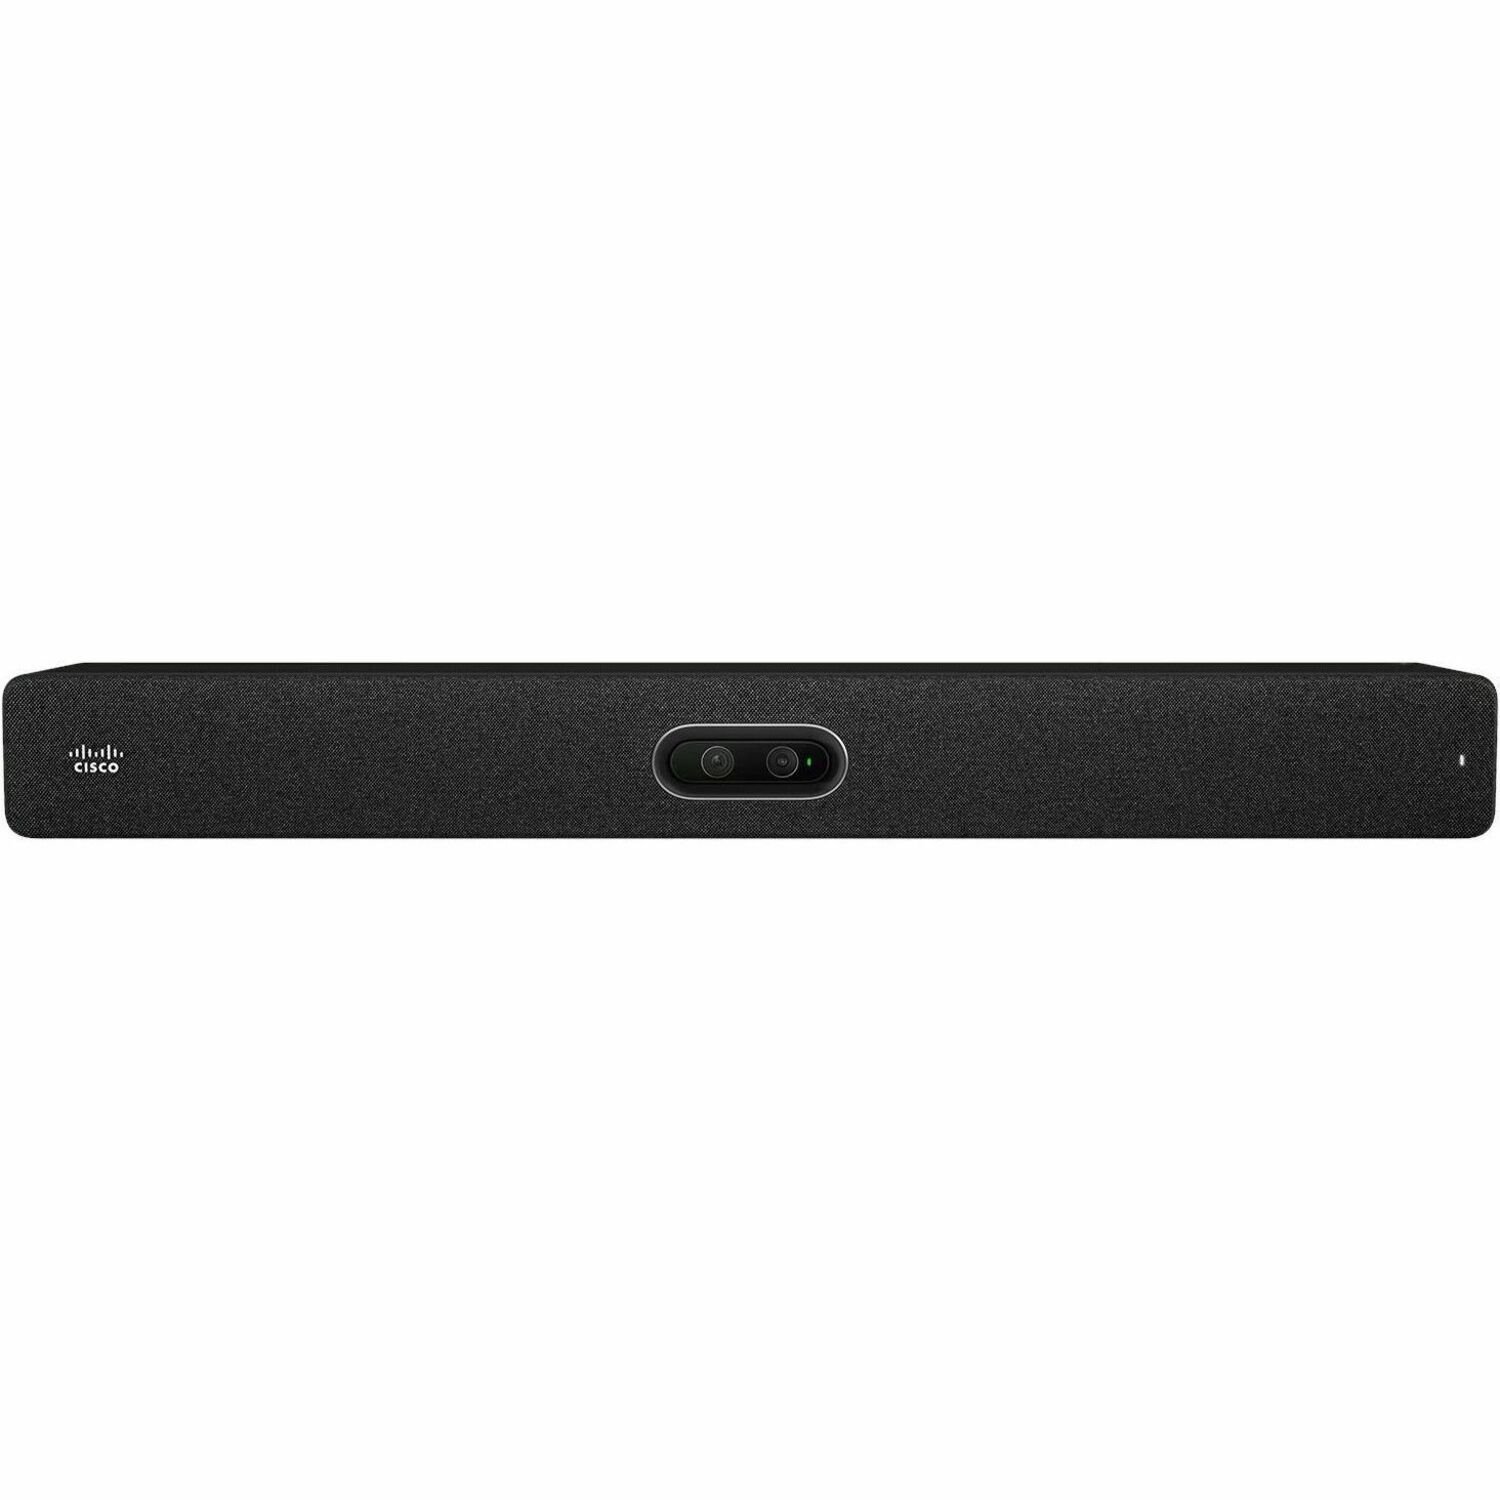 Webex Room Bar Pro TTC4-01 Video Conference Equipment for Medium Room(s) - Carbon Black